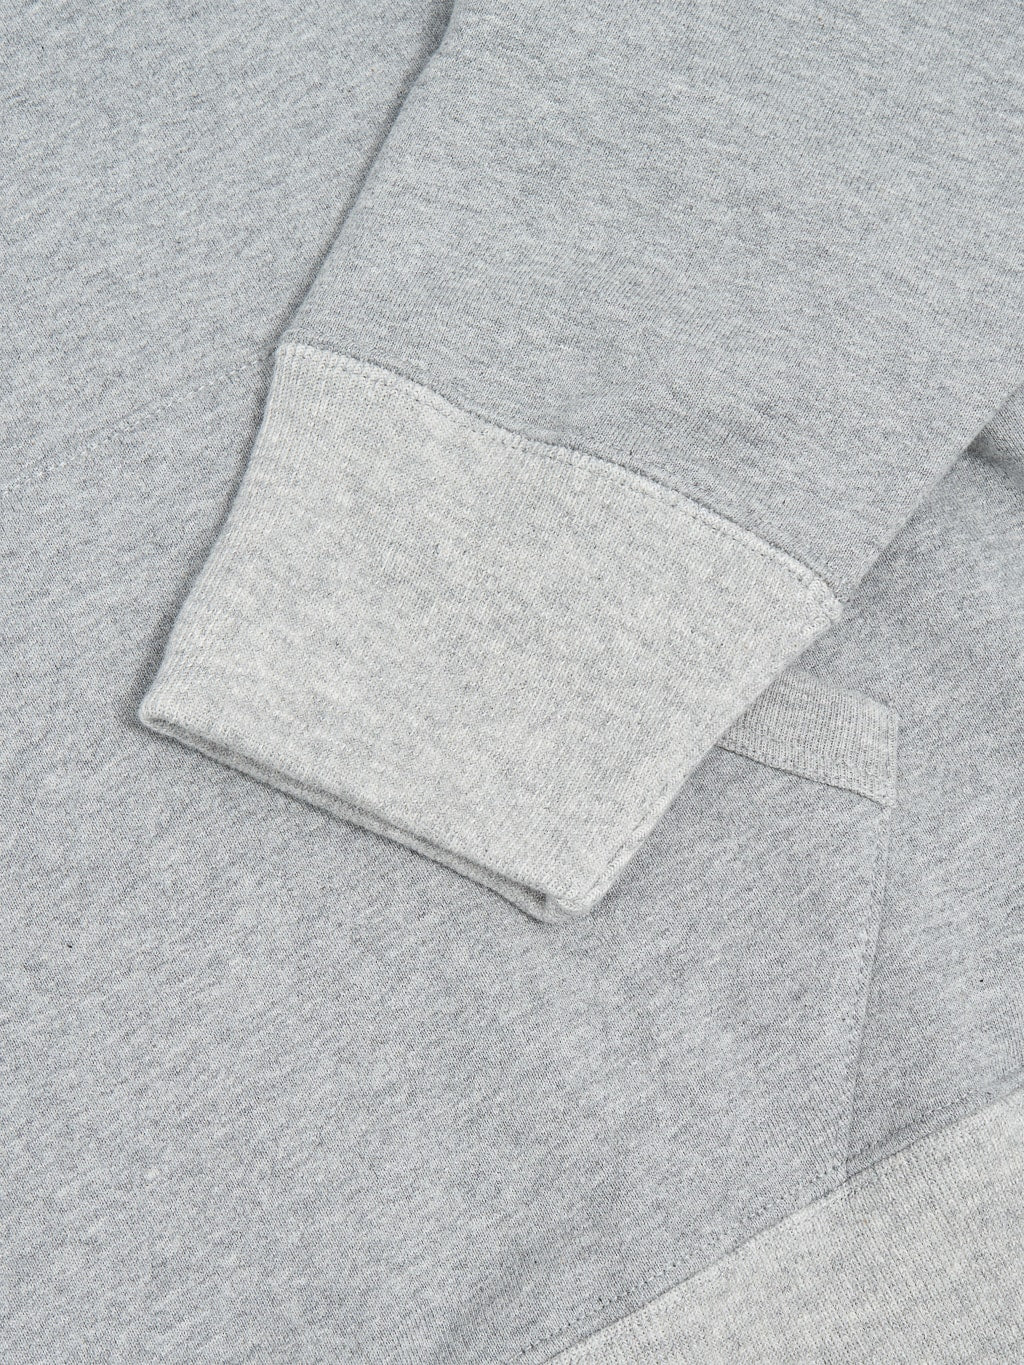 Merz b schwanen loopwheeled hoodie grey elastic cuff